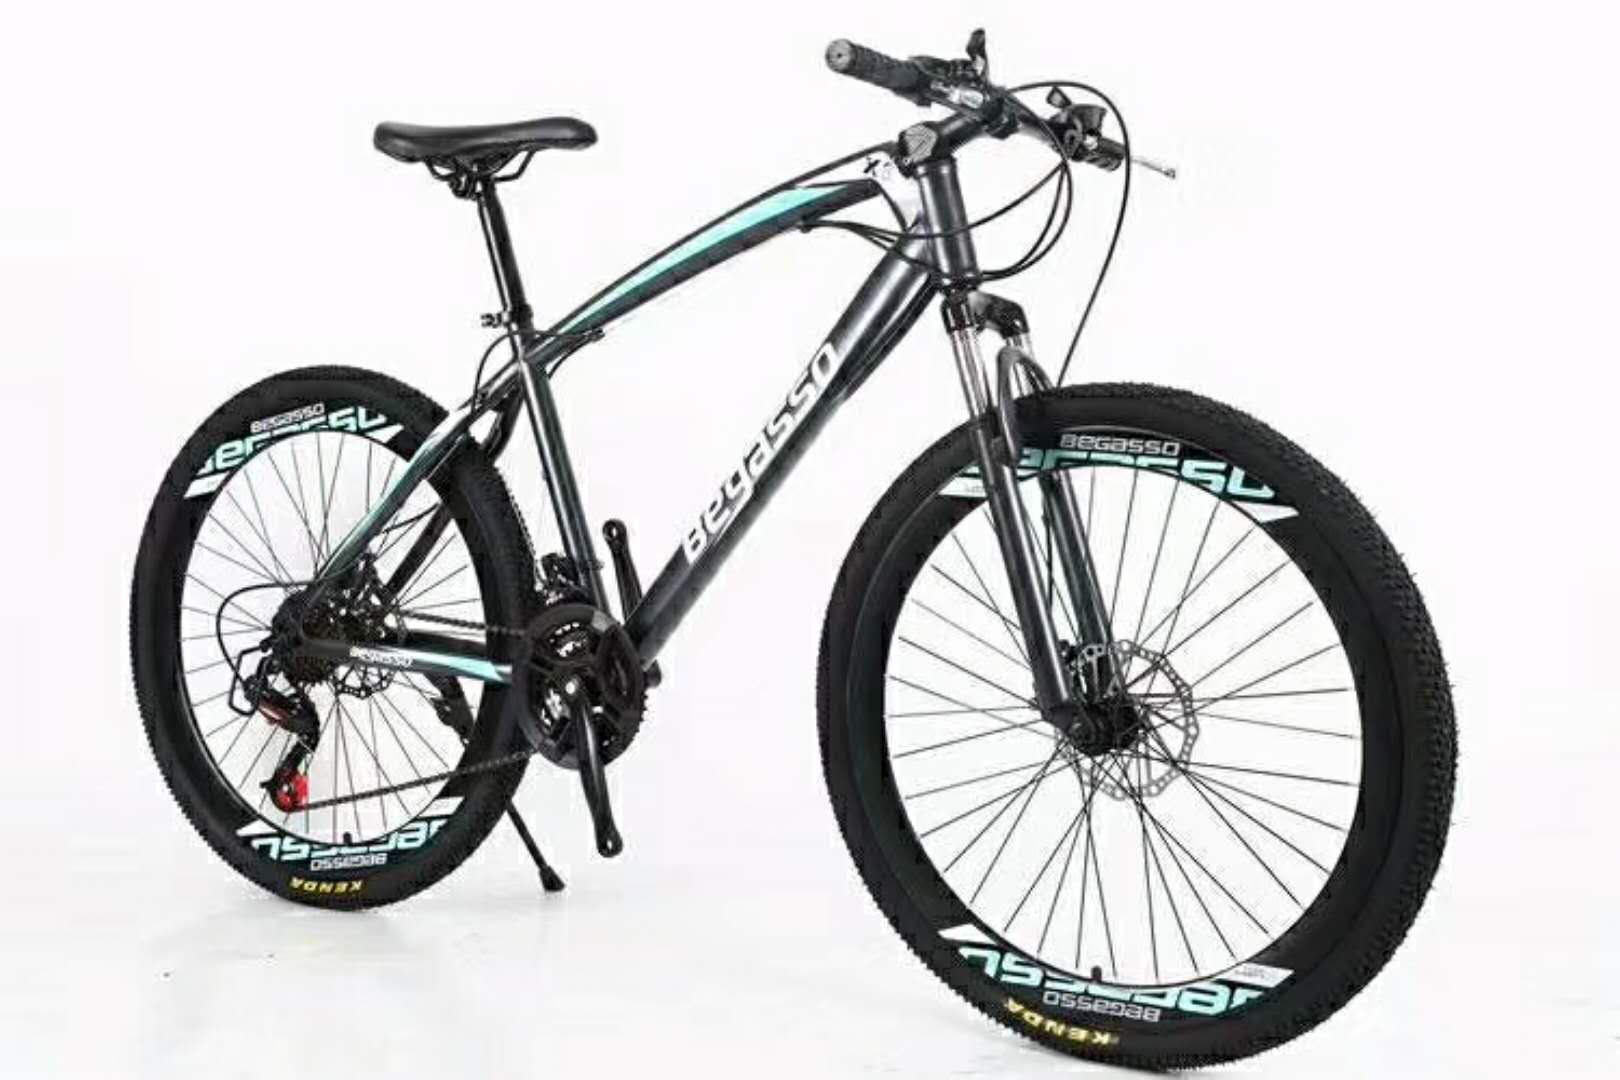 26 inch leopard bike